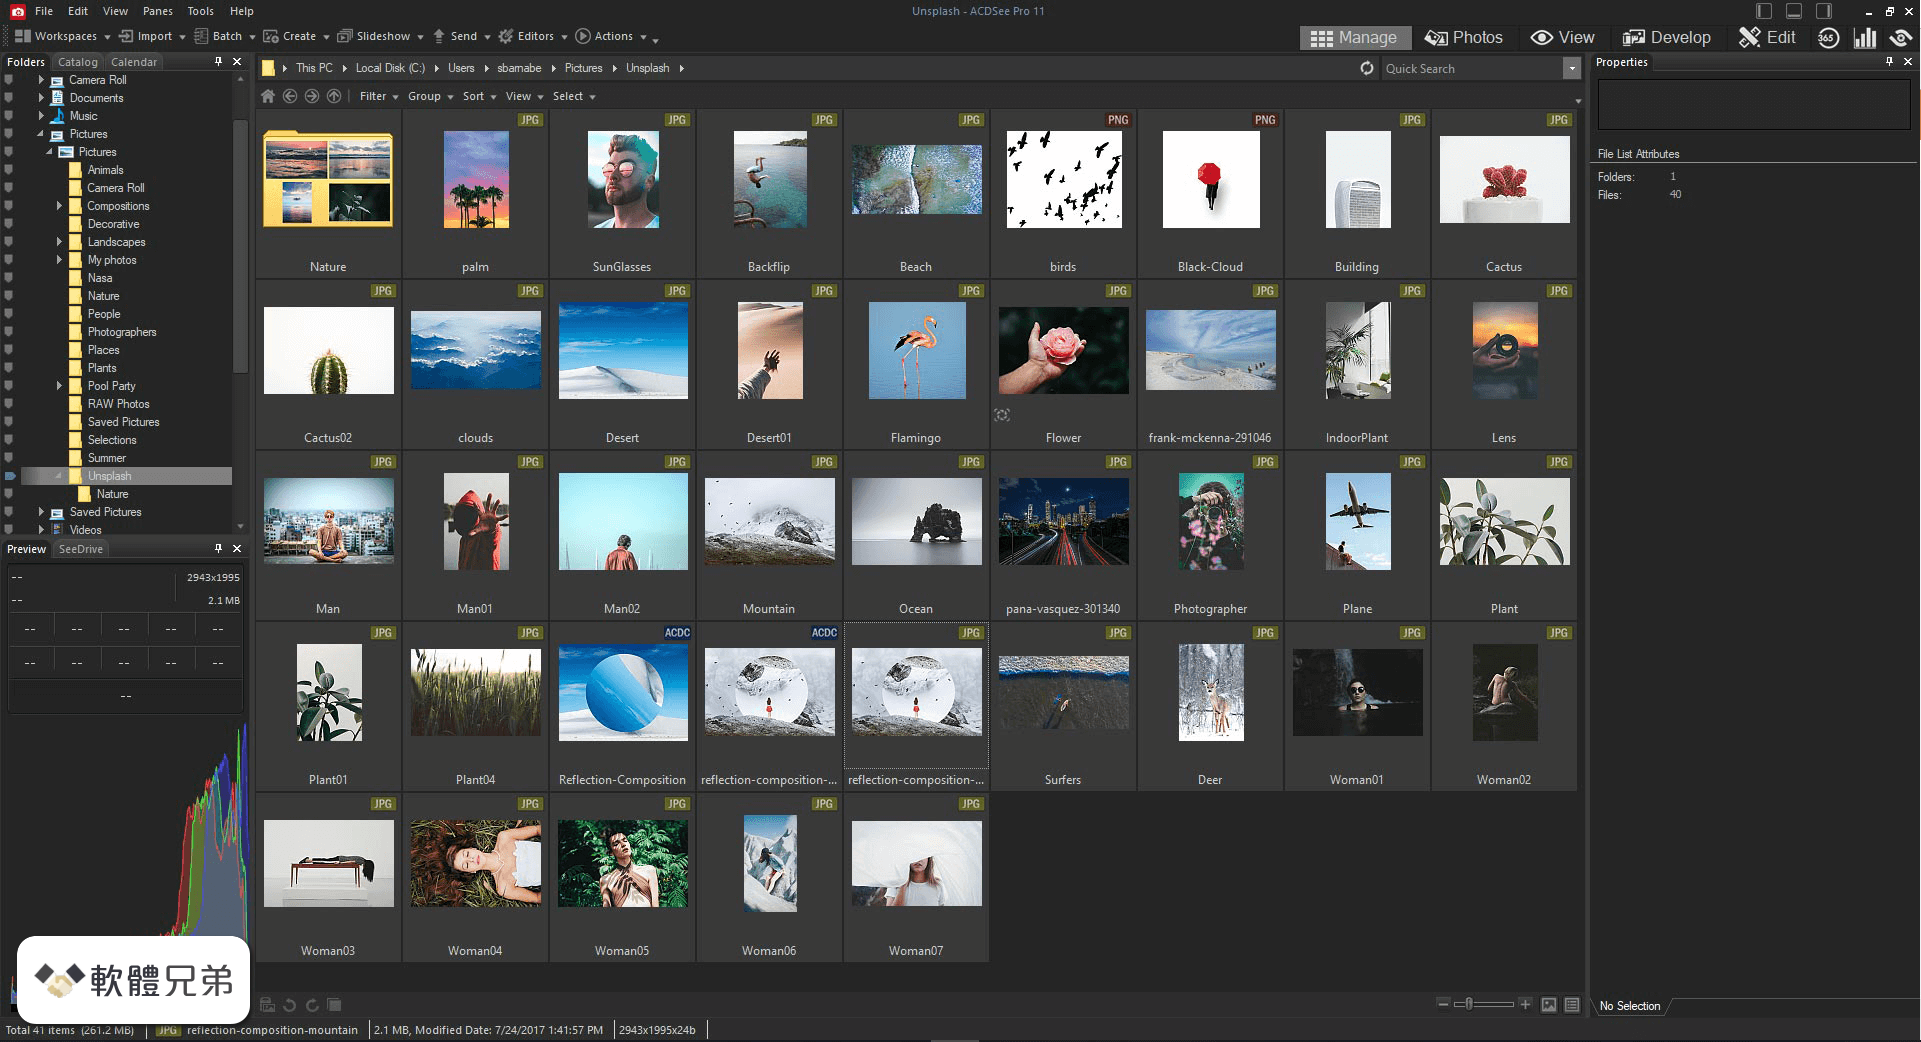 ACDSee Photo Studio Professional (64-bit) Screenshot 4